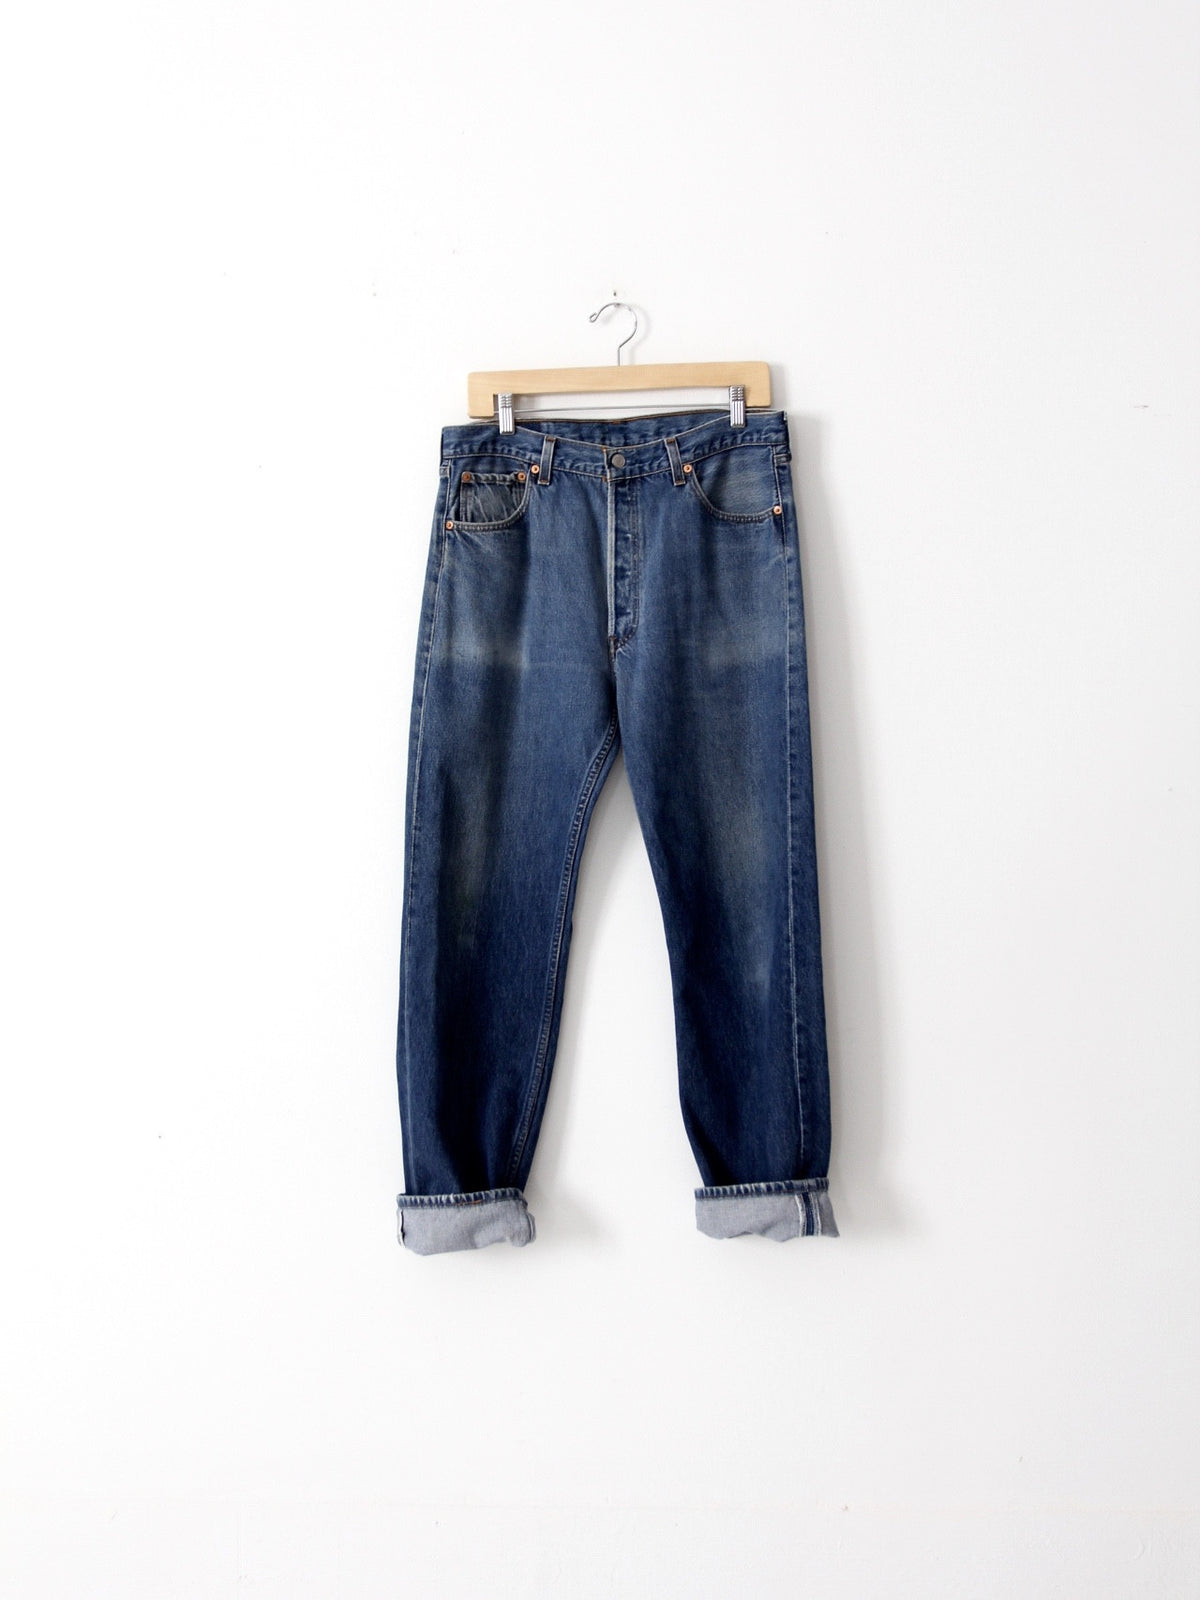 vintage Levi's 501xx denim jeans, 33 x 31